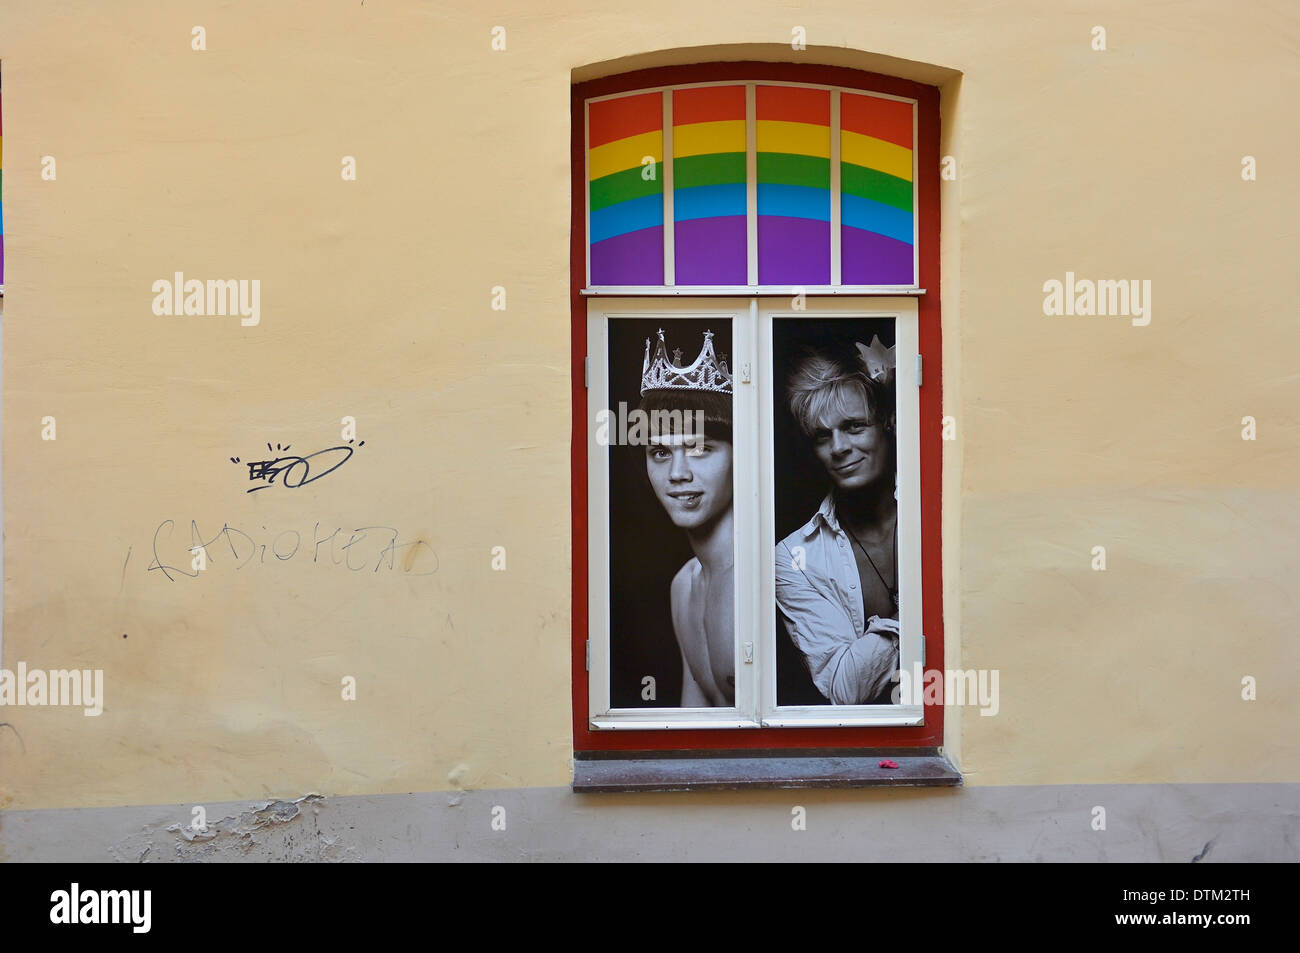 Exterior of a gay bar and nightclub. Tallinn. Estonia Stock Photo